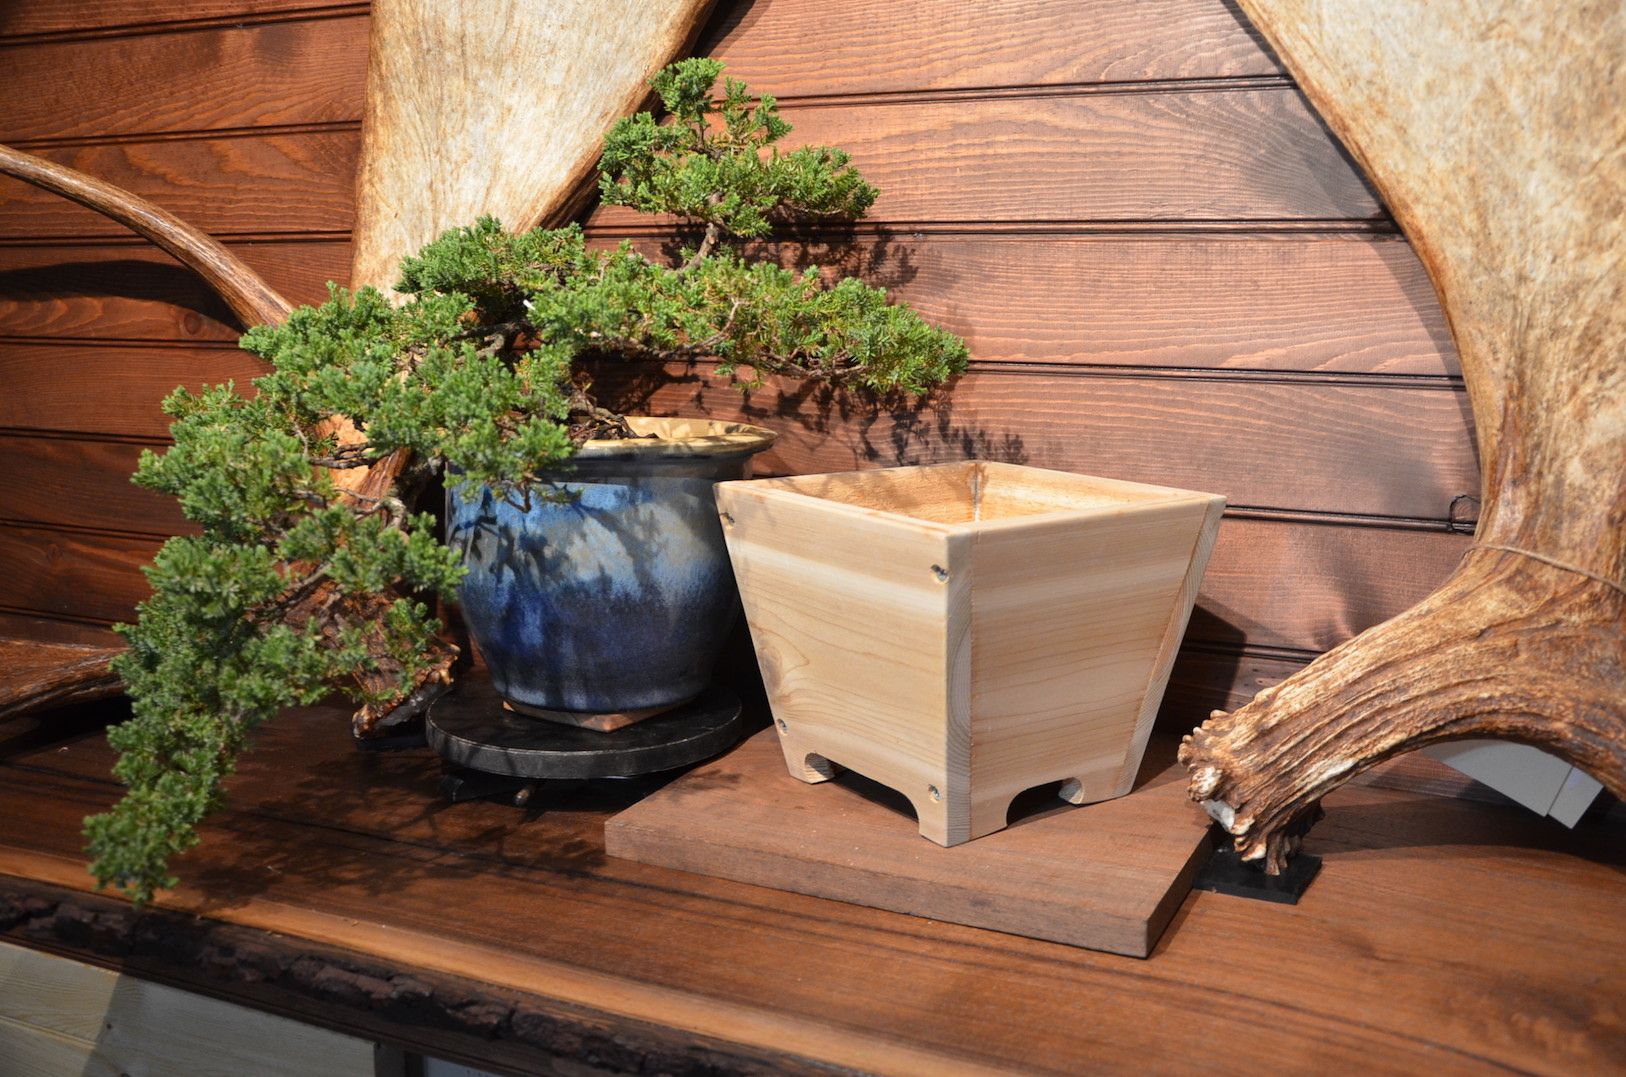 Wooden pot